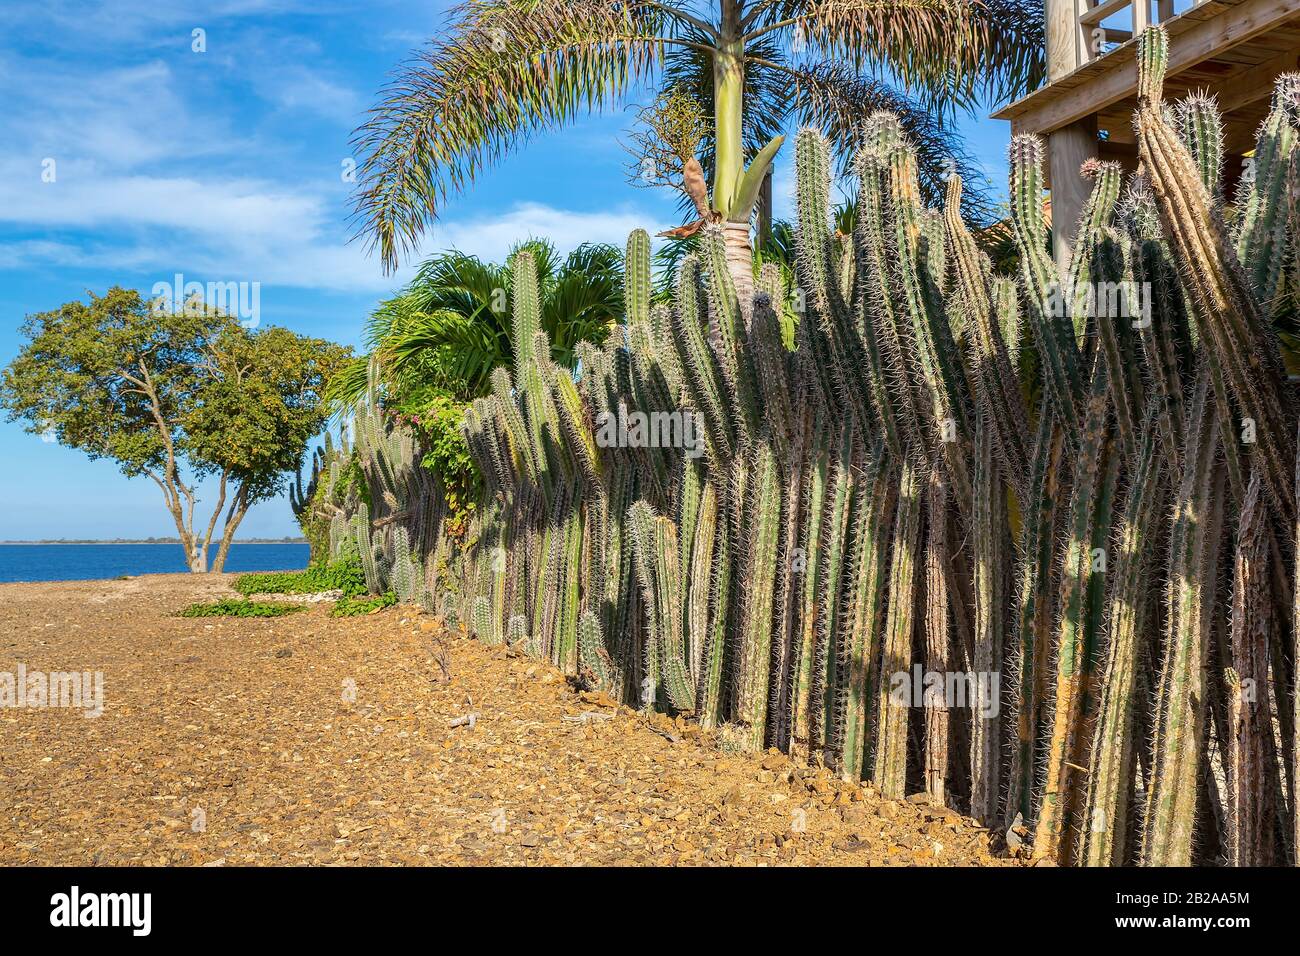 Row of Cactus plants as garden fencing at coast of Bonaire Stock Photo